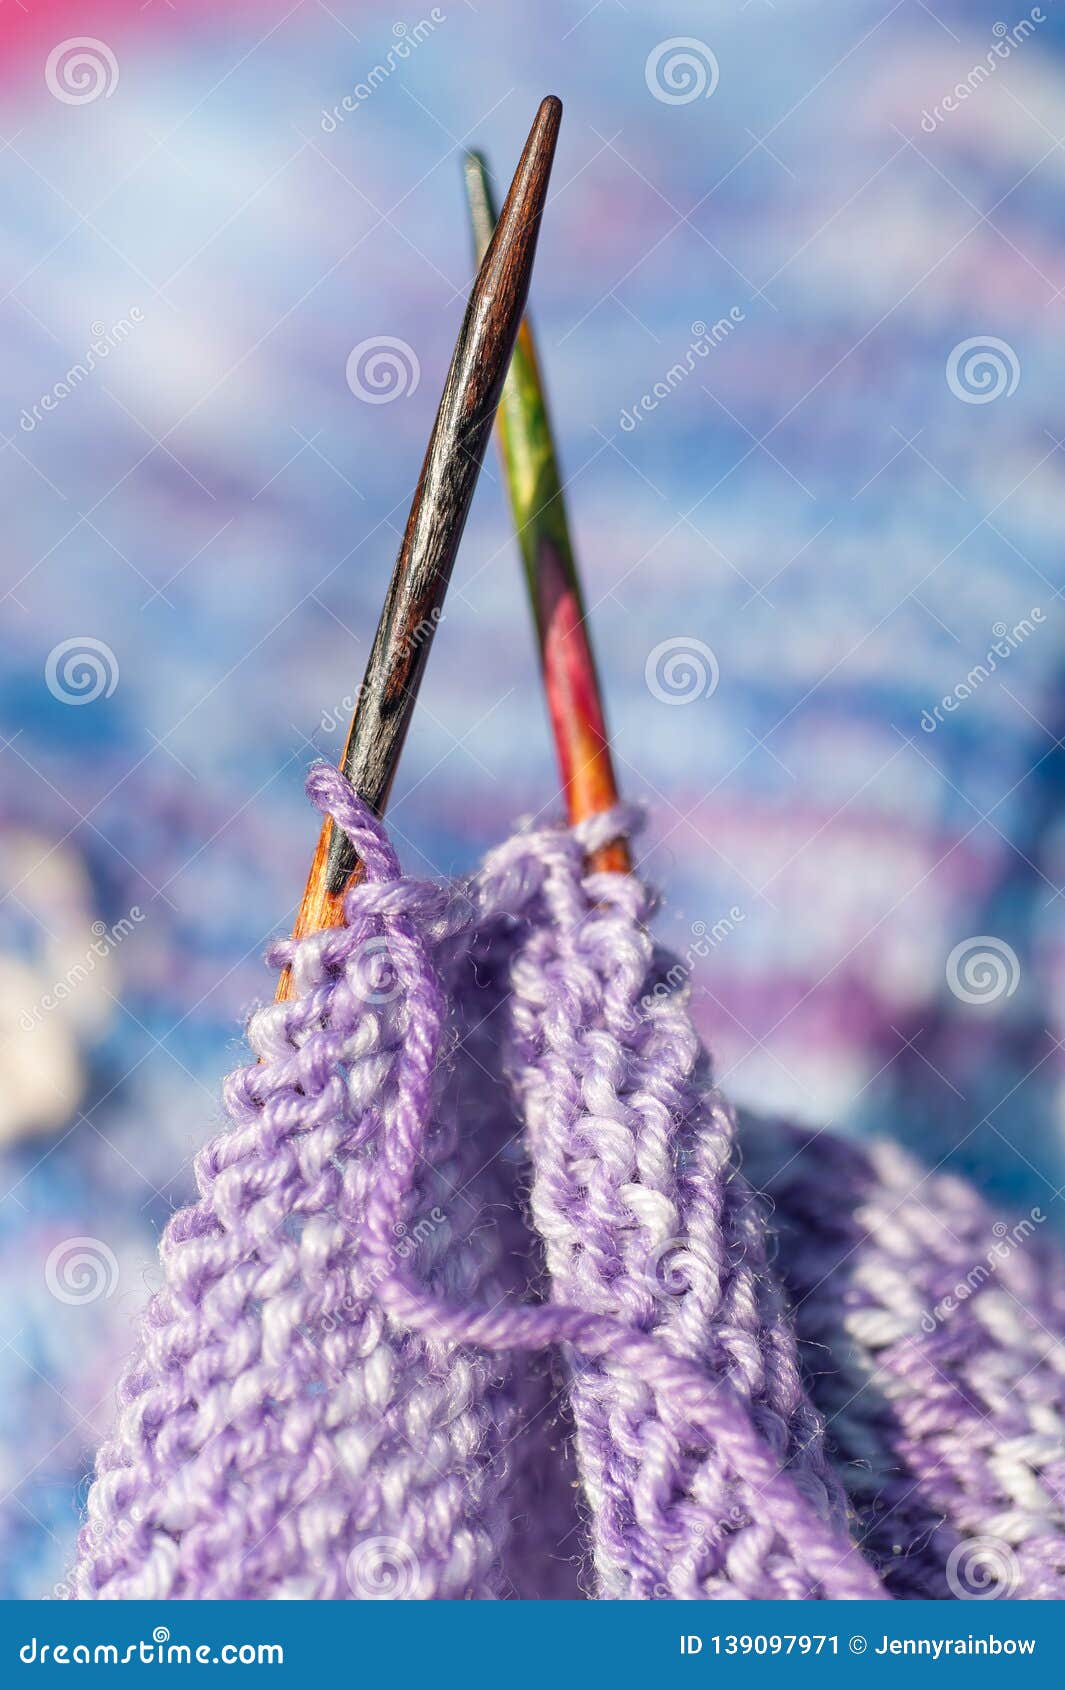 Macro of Knitting Needles with Pale Purple Yarn Vertical Stock Image ...